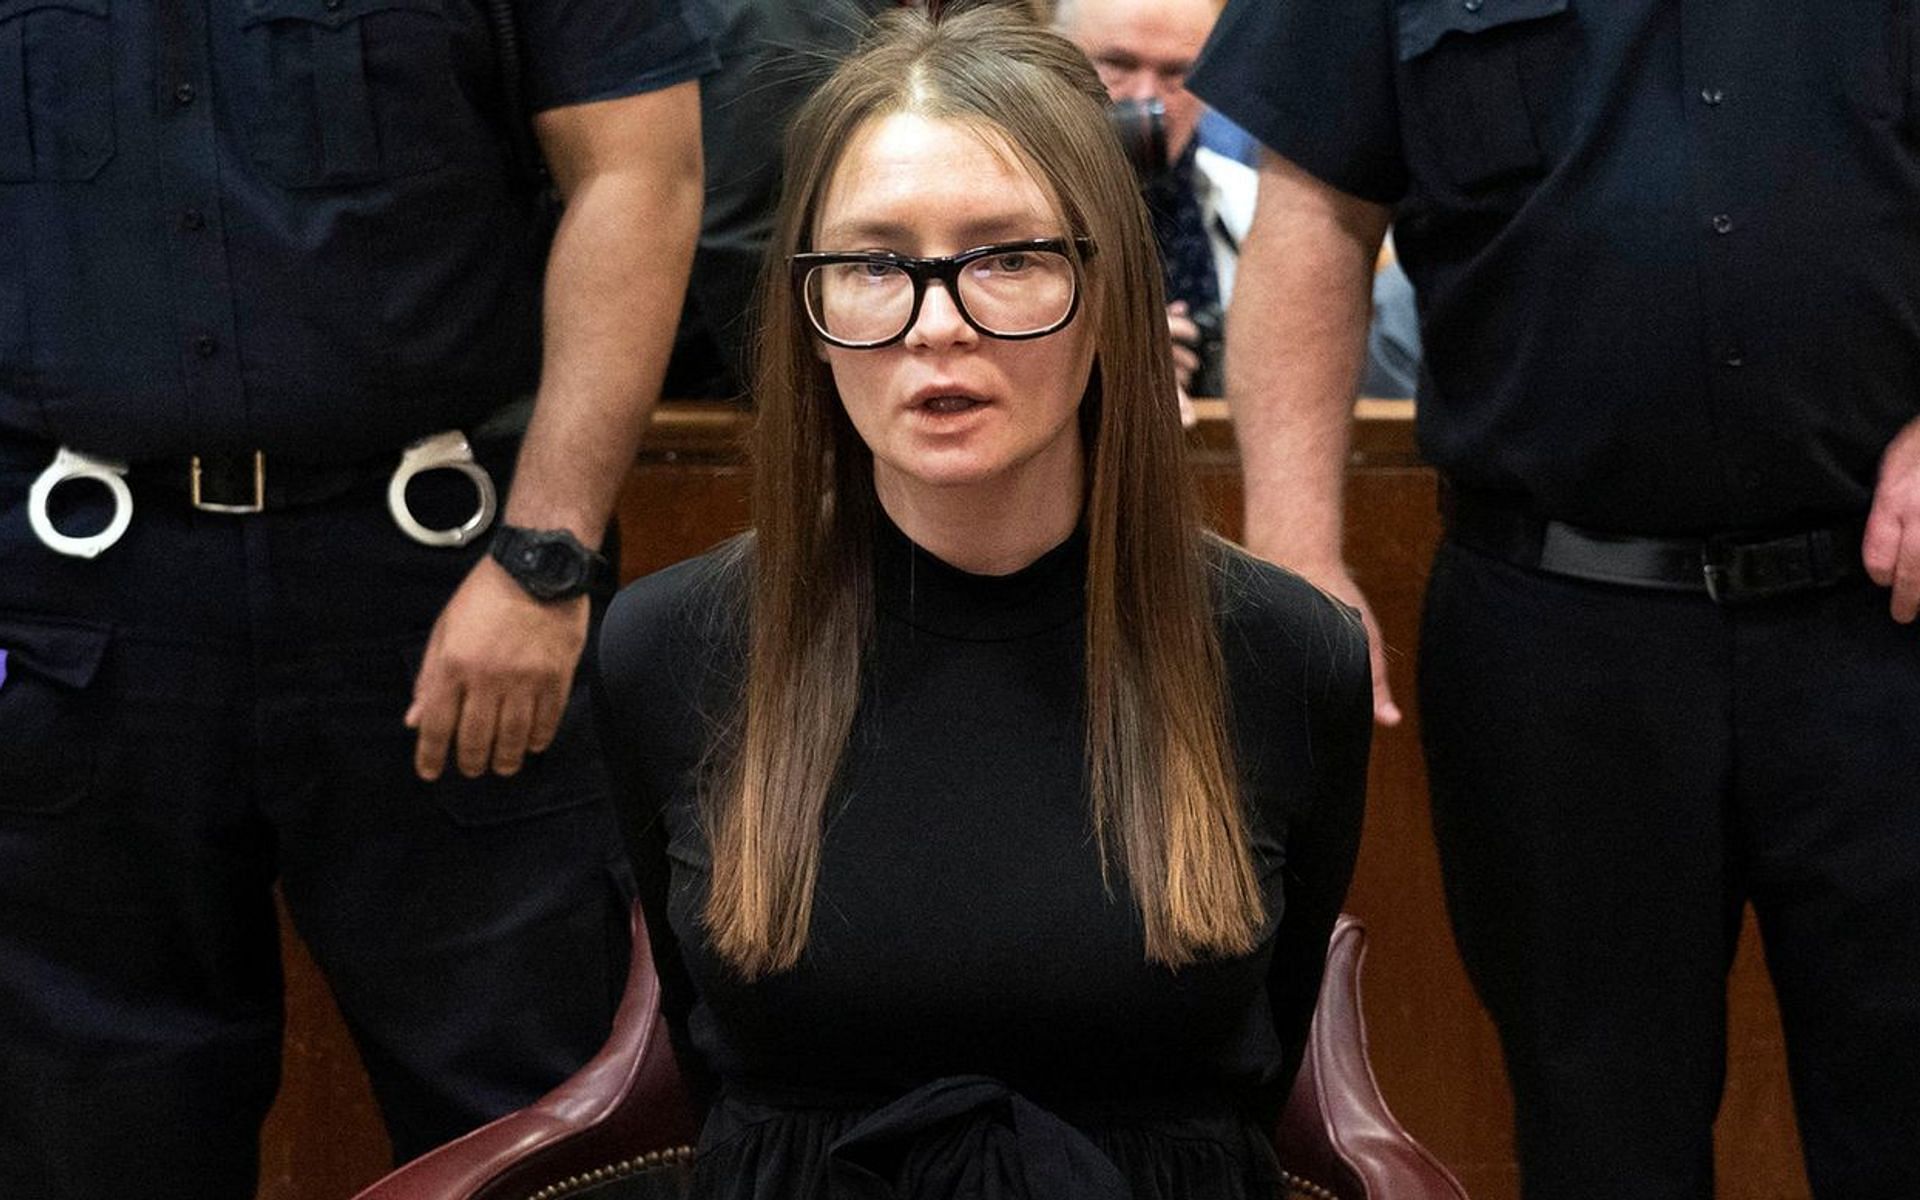 Anna Sorokin at her trial (Image via NY Post)